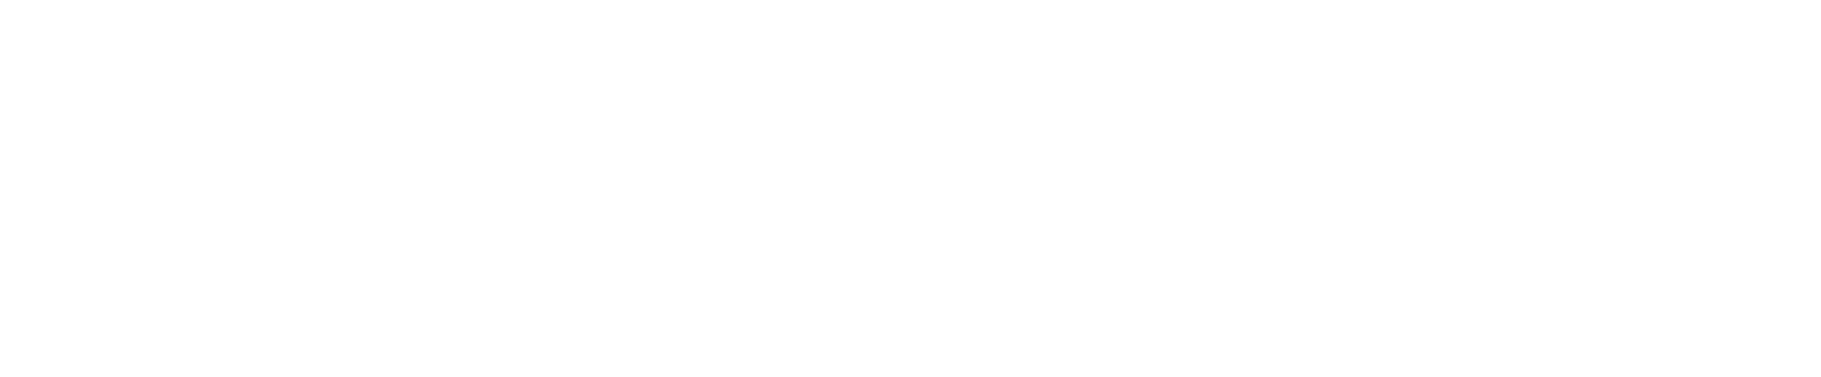 Cloud App Logo - HK Cloud App Development